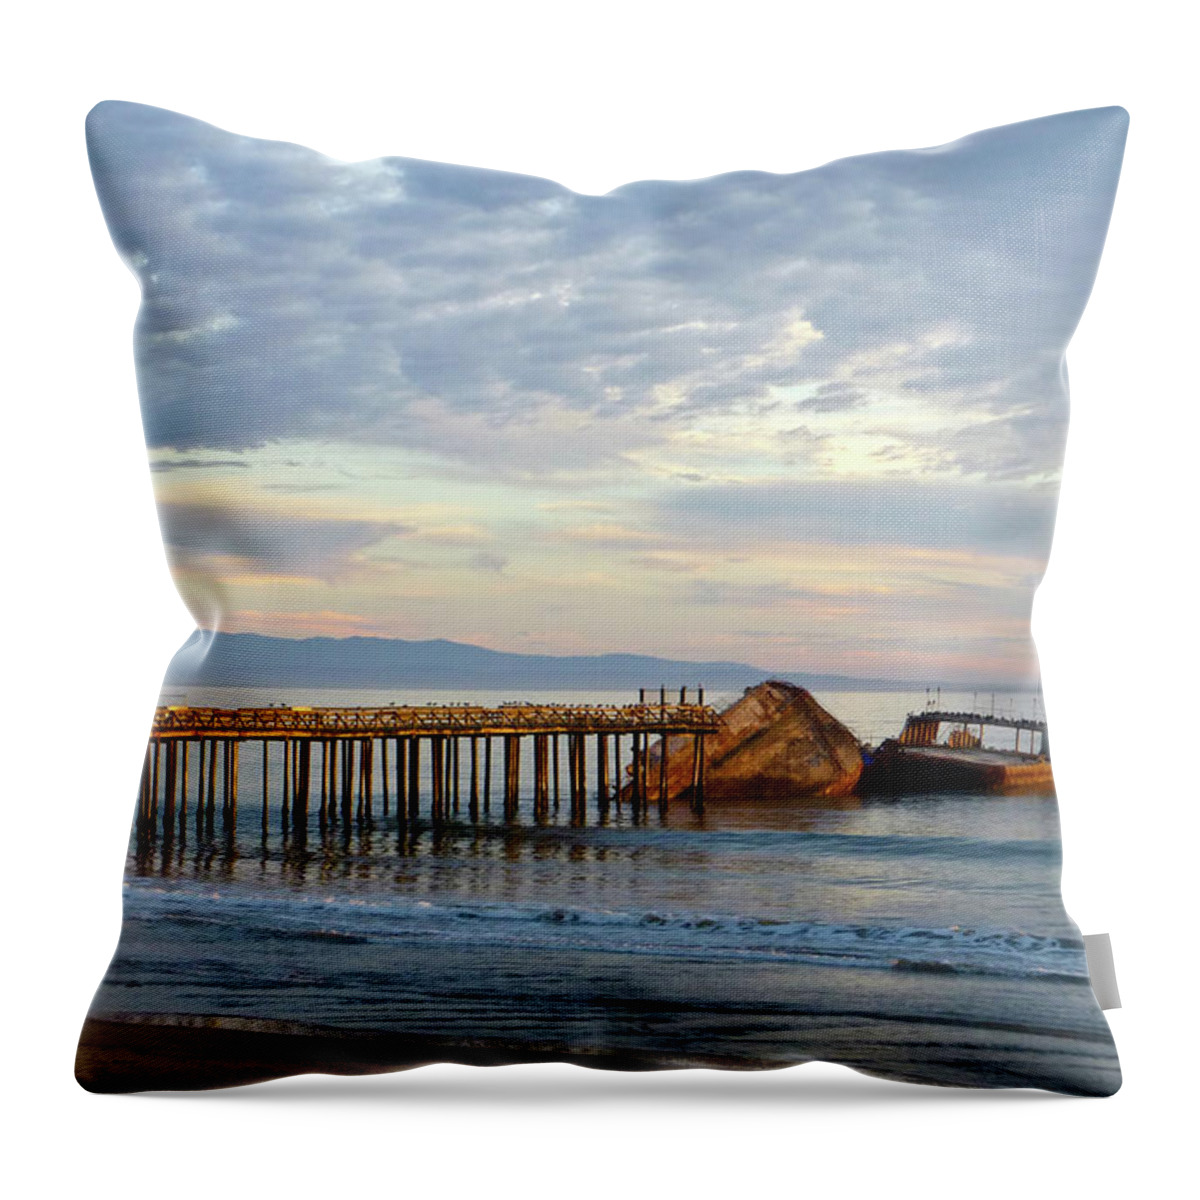 Ss Palo Alto Throw Pillow featuring the photograph Broken Boat, SS Palo Alto by Amelia Racca